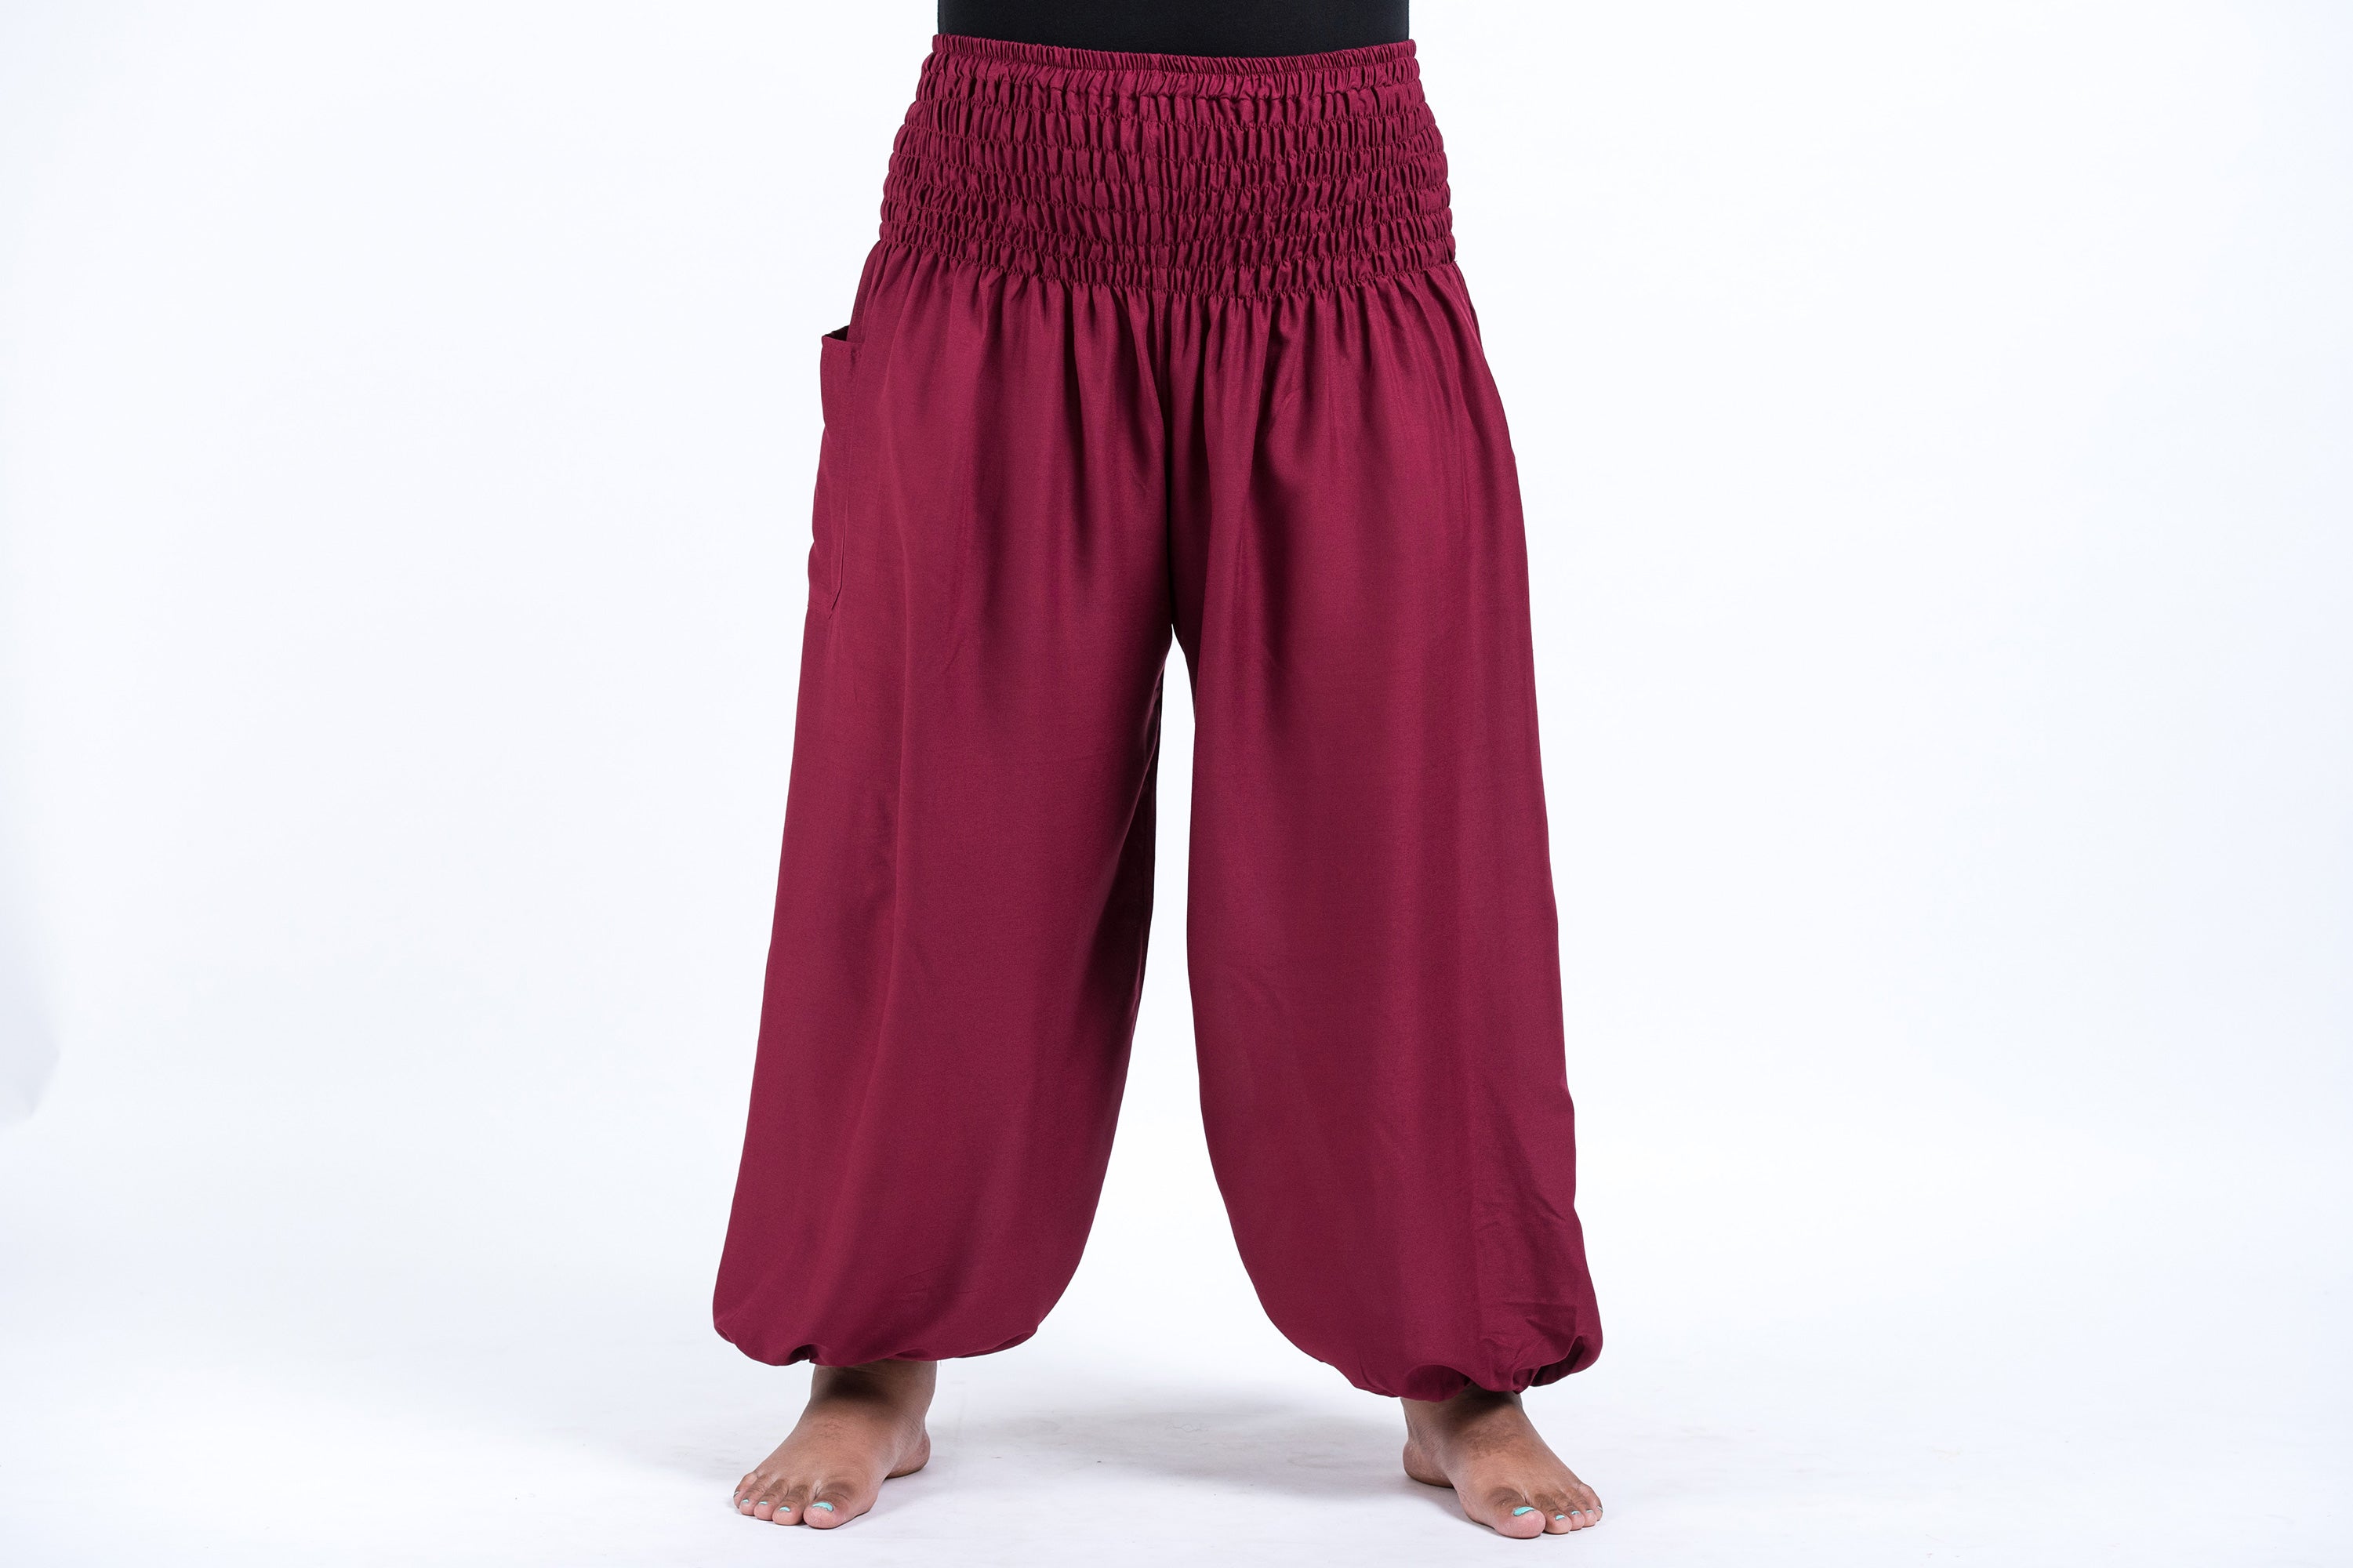  SUNYAA Plus Size Harem Pants For Women High Waisted